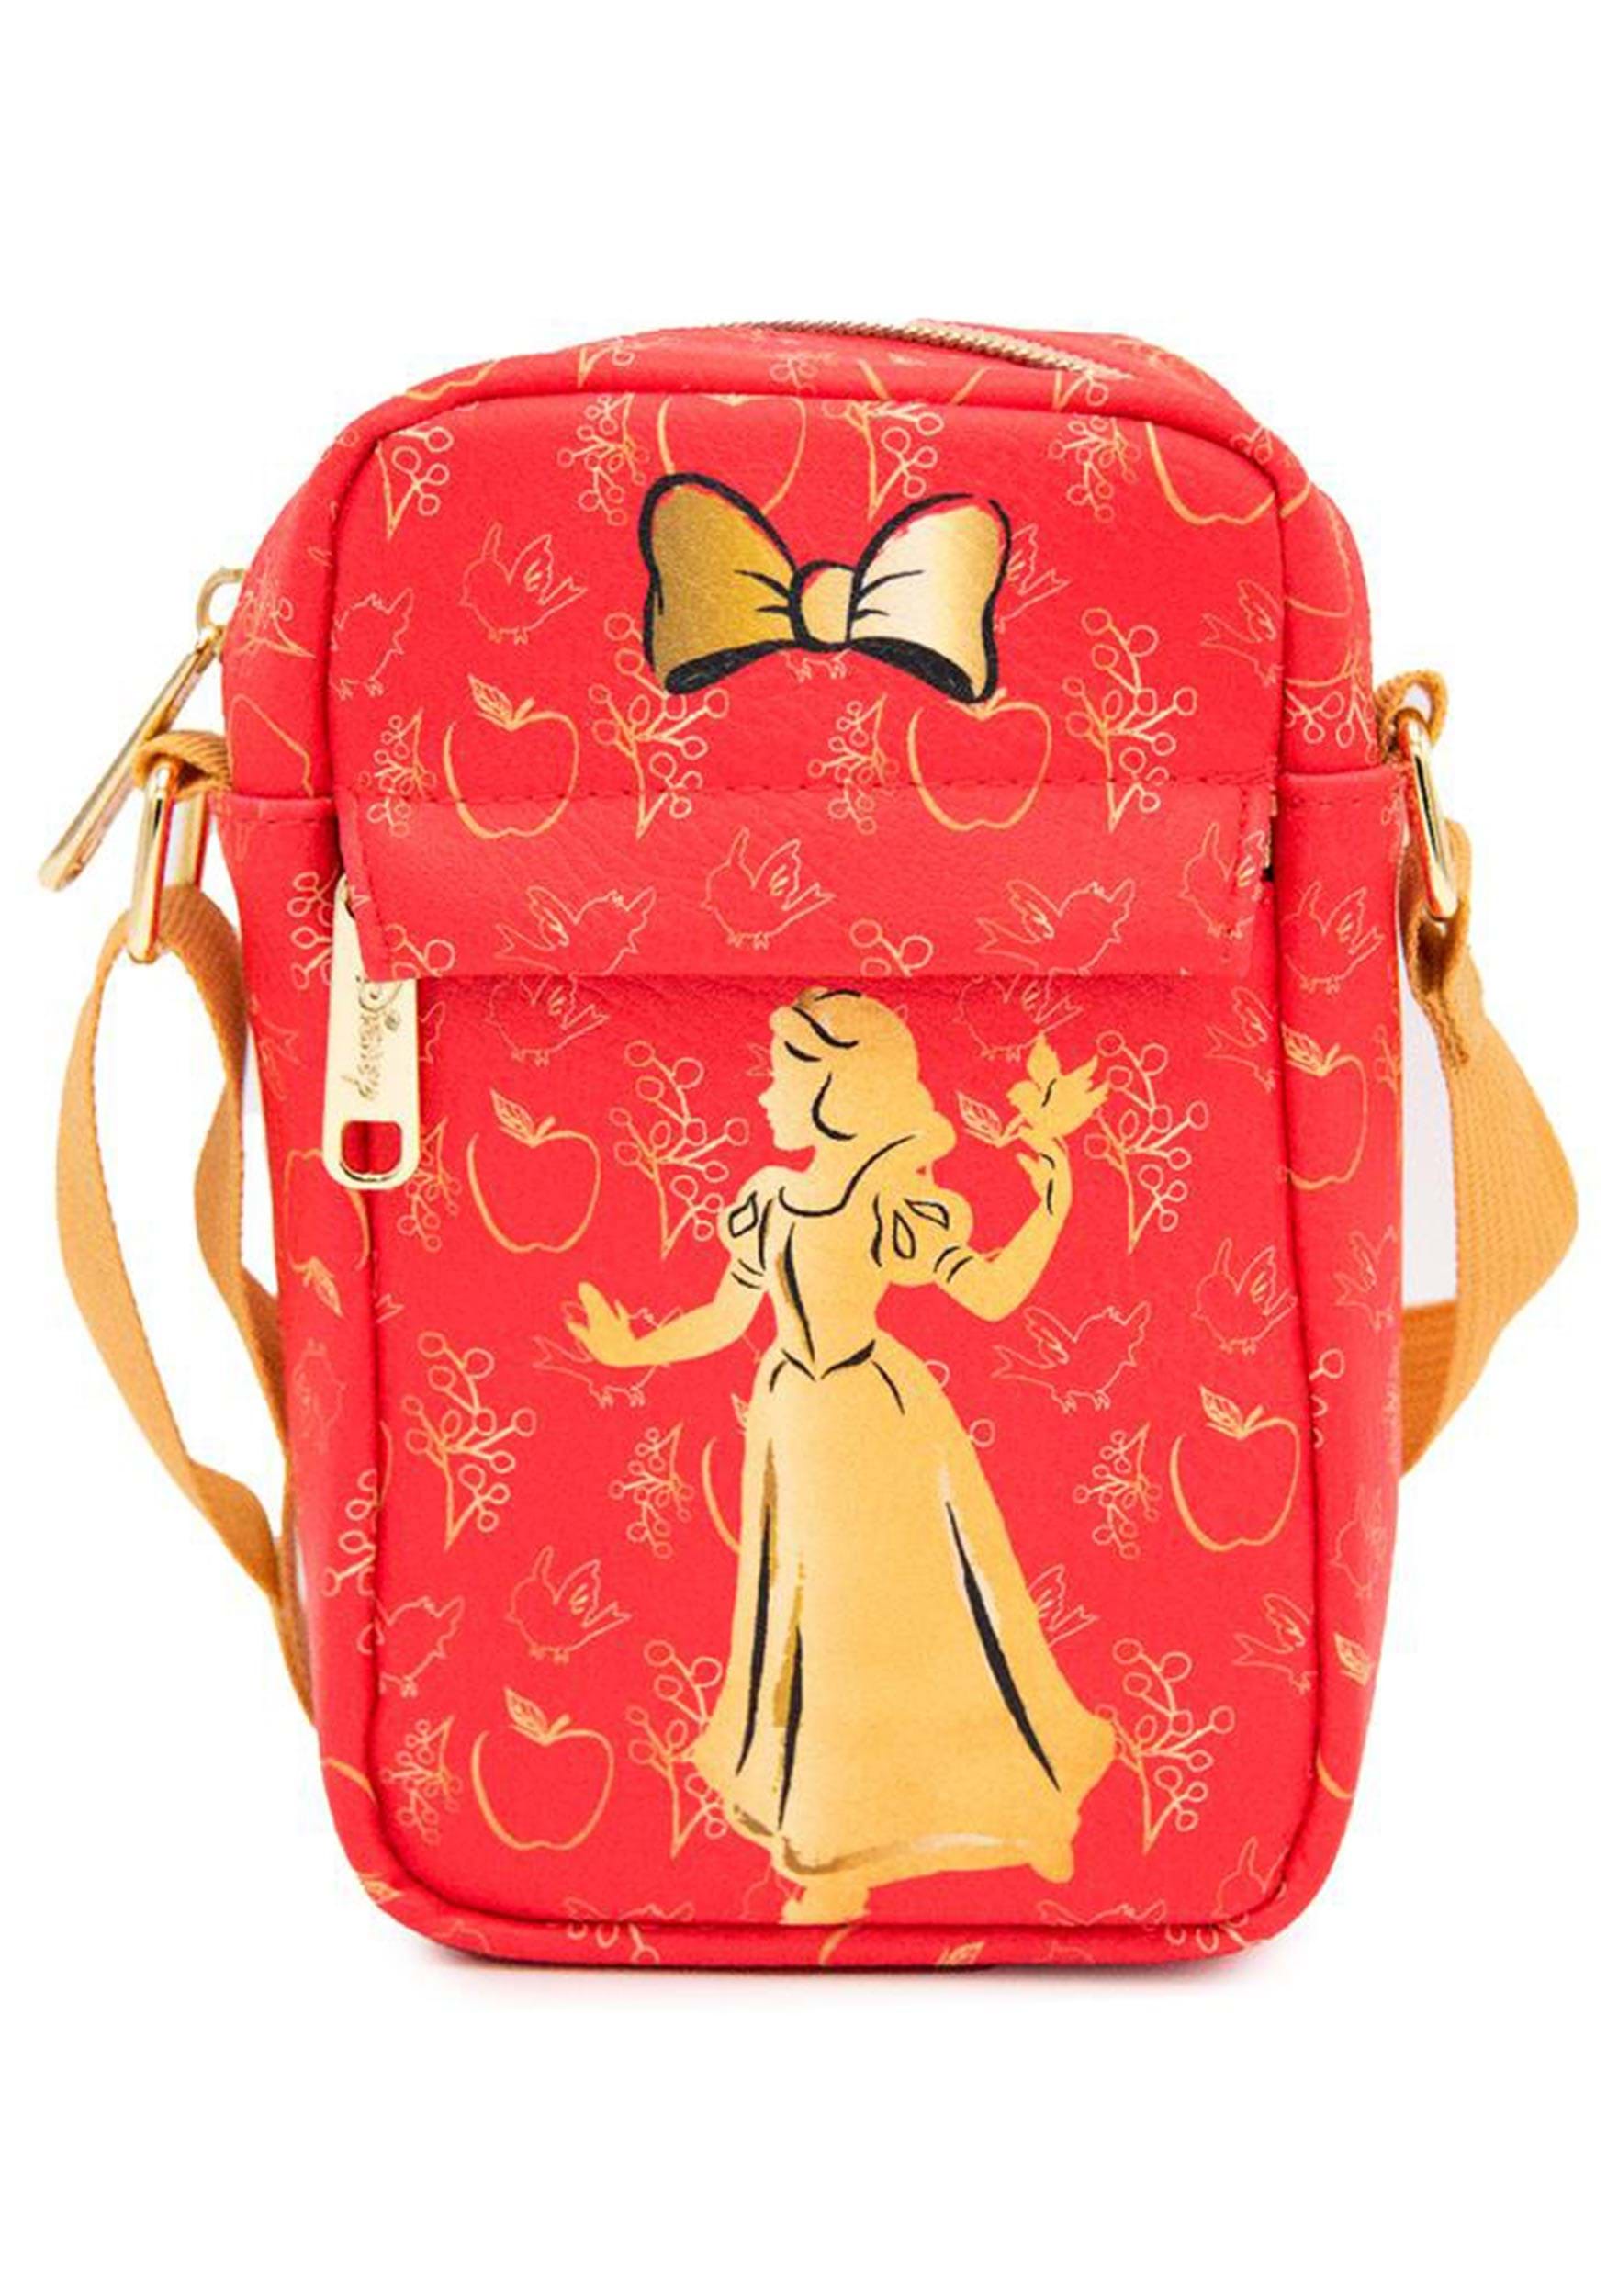 Disney Danielle Nicole Snow White Purse Crossbody Bag Dopey Limited Ed. NEW  | eBay